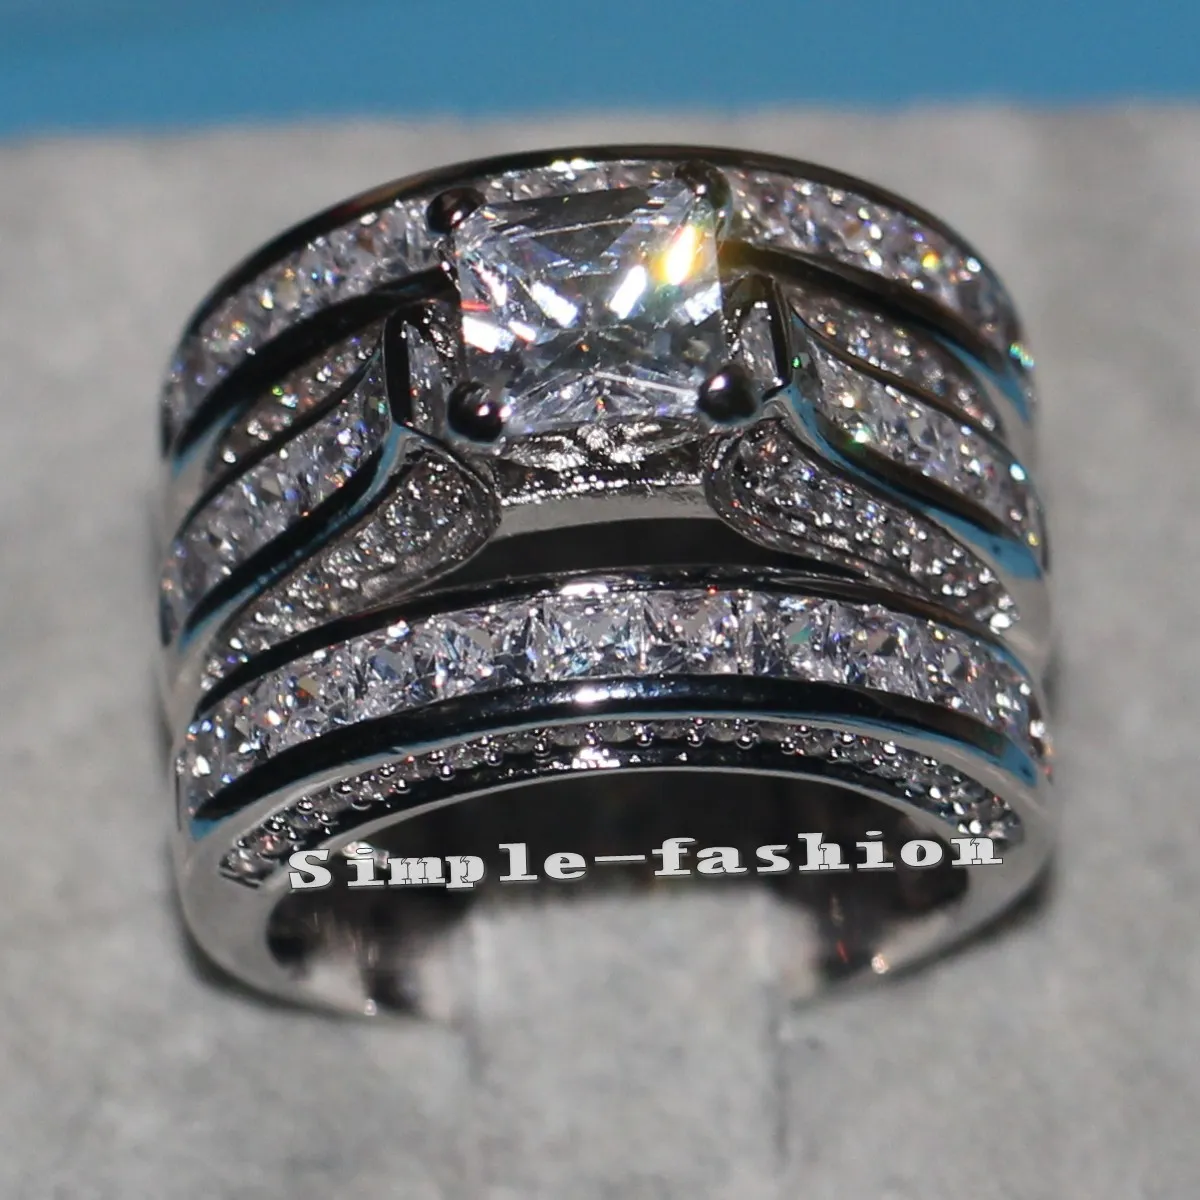 Vecalon Fine Jewelry Принцесса огранки 20 карат Cz бриллиант Обручальное обручальное кольцо набор для женщин 14KT белое золото заполненное кольцо на палец